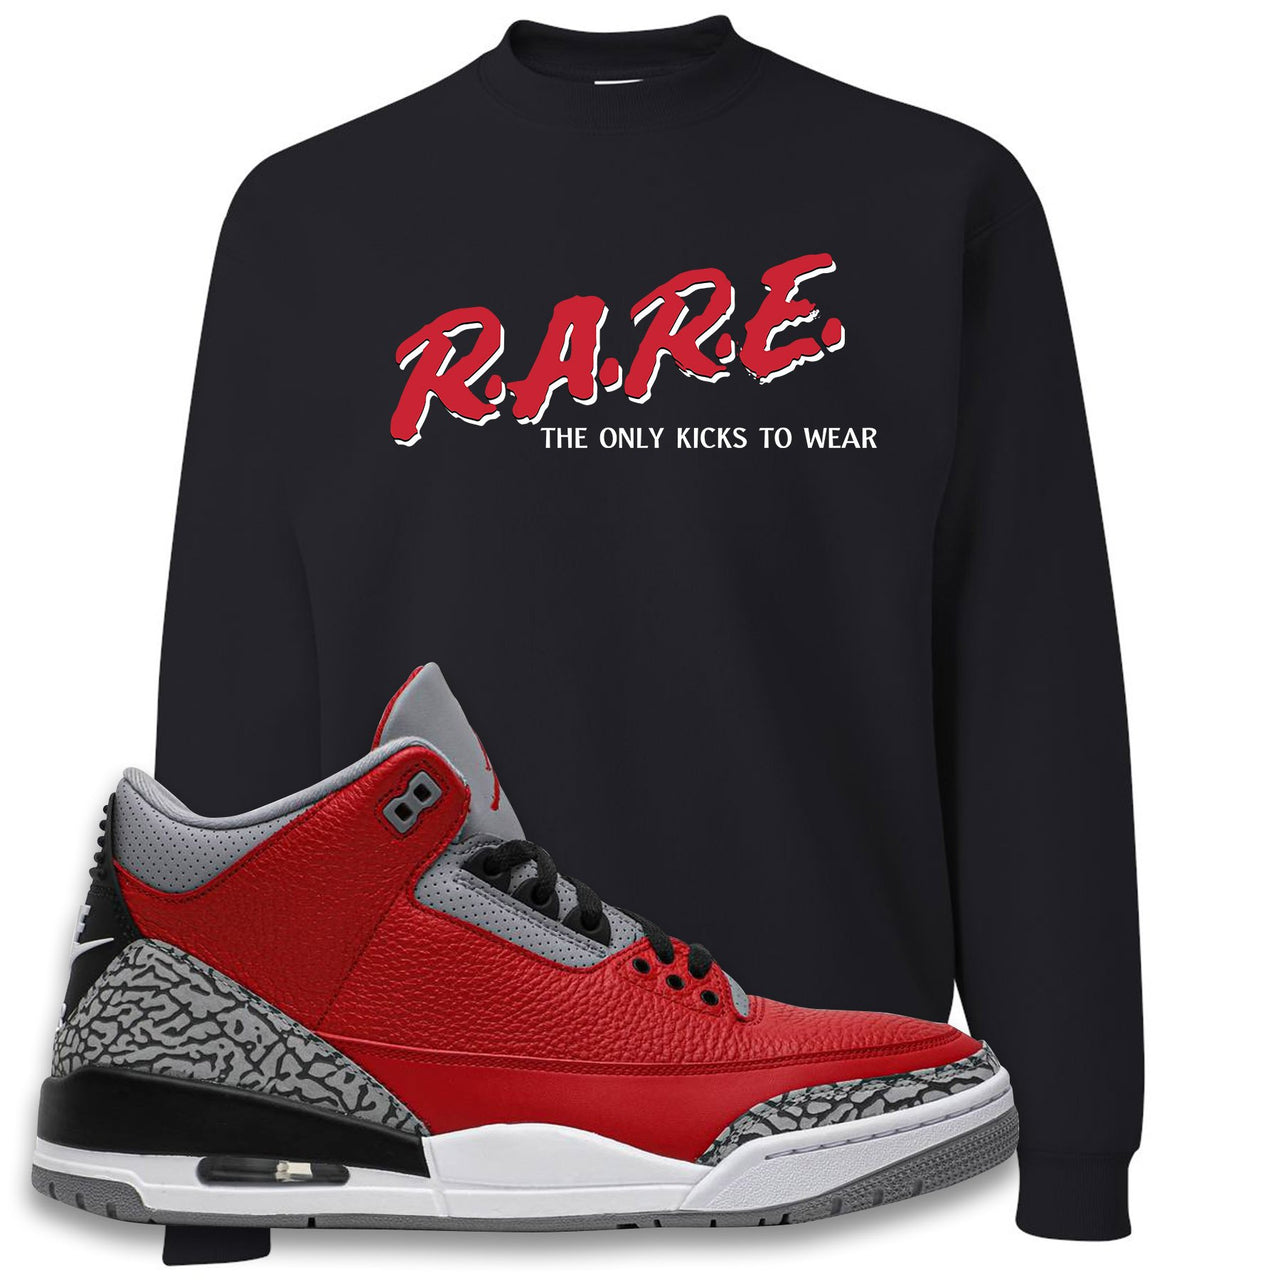 Chicago Exclusive Jordan 3 Red Cement Sneaker Black Crewneck Sweatshirt | Crewneck to match Jordan 3 All Star Red Cement Shoes | Rare